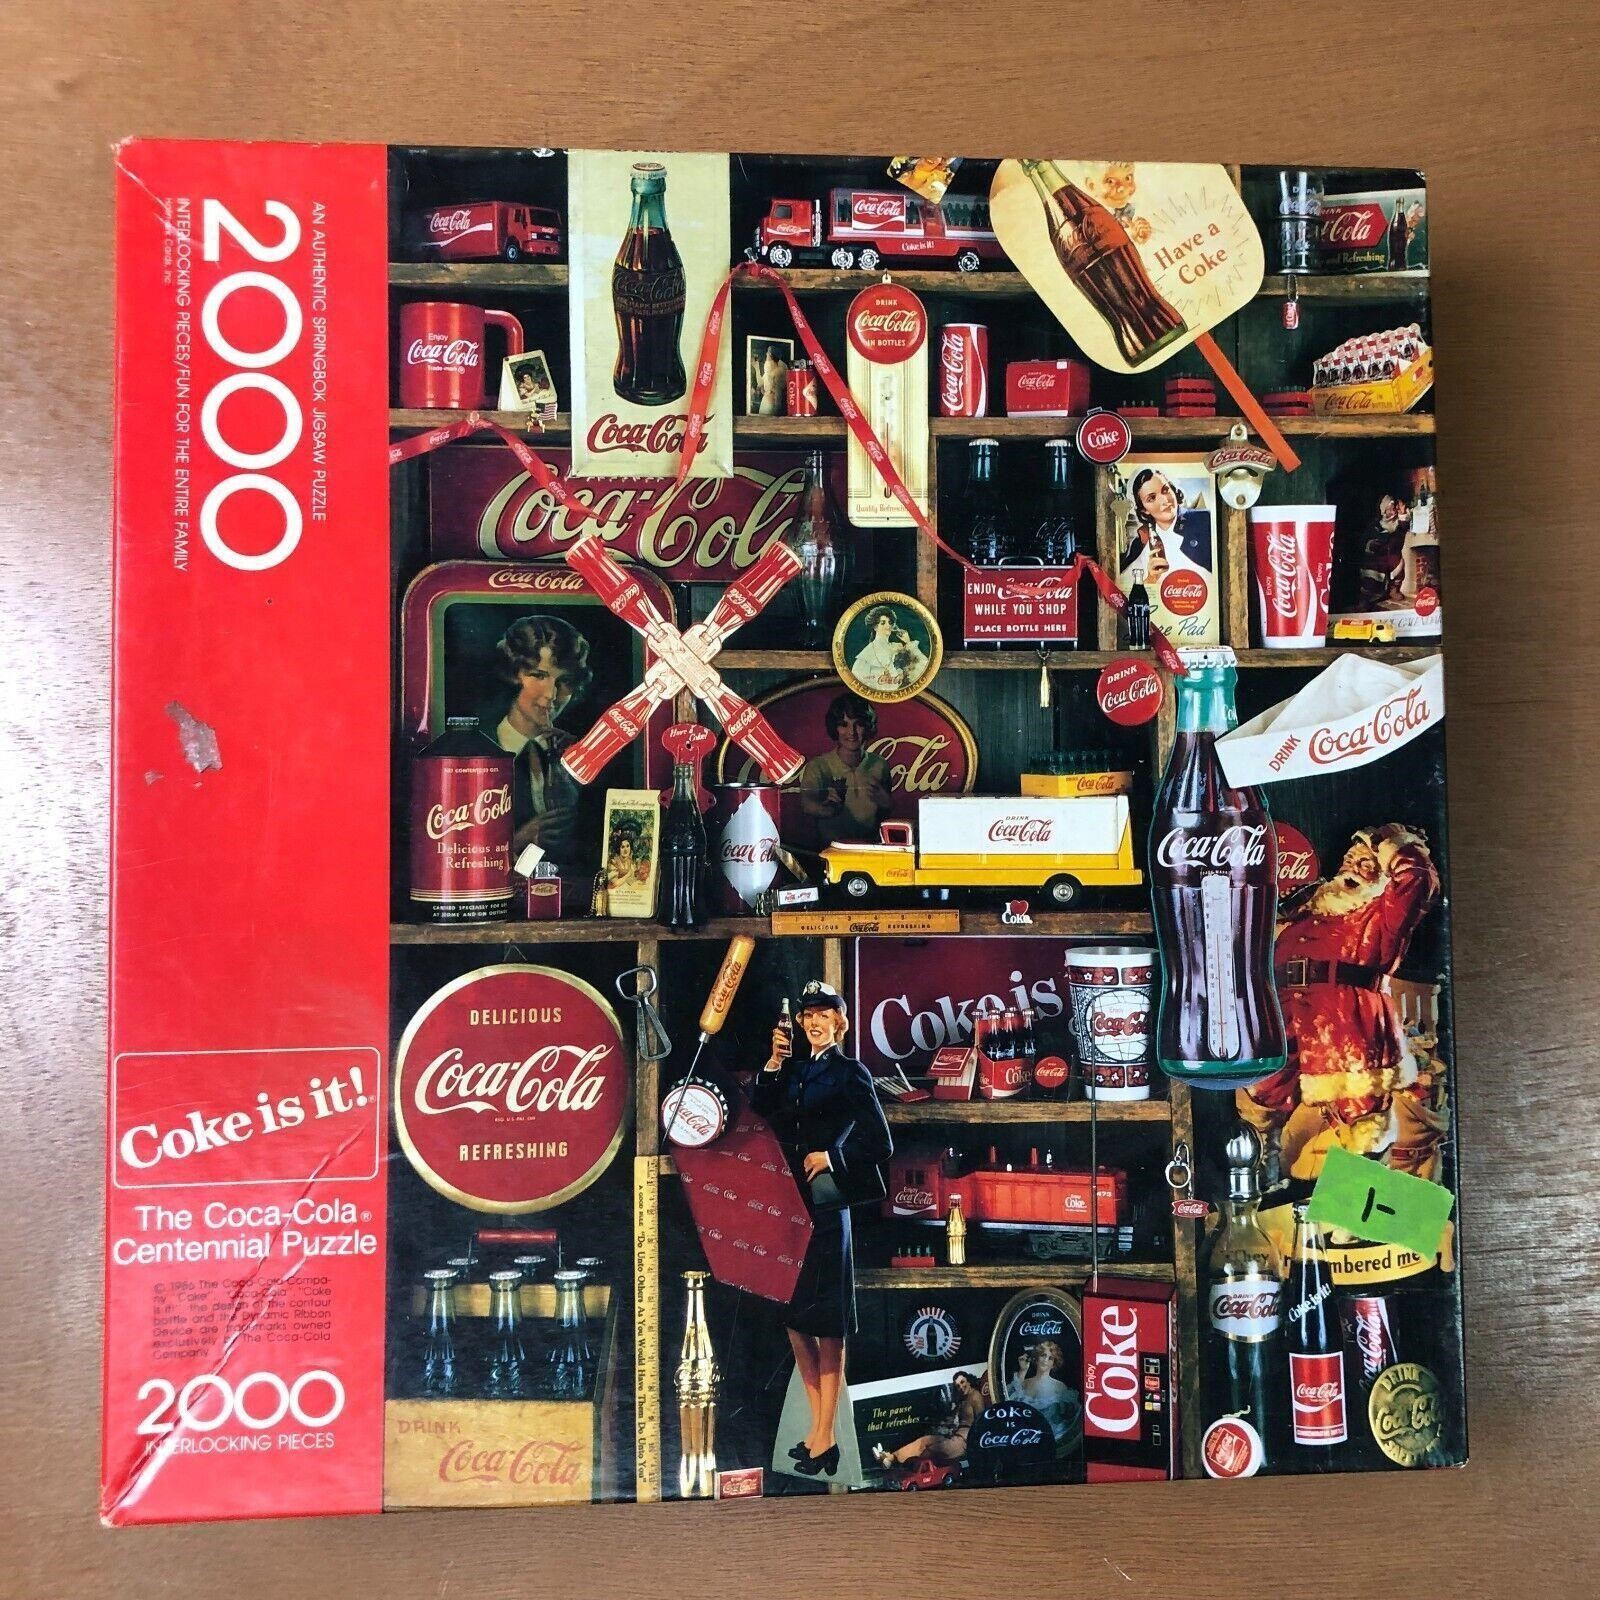 Springbok Classic Vintage "Coke is it! Puzzle